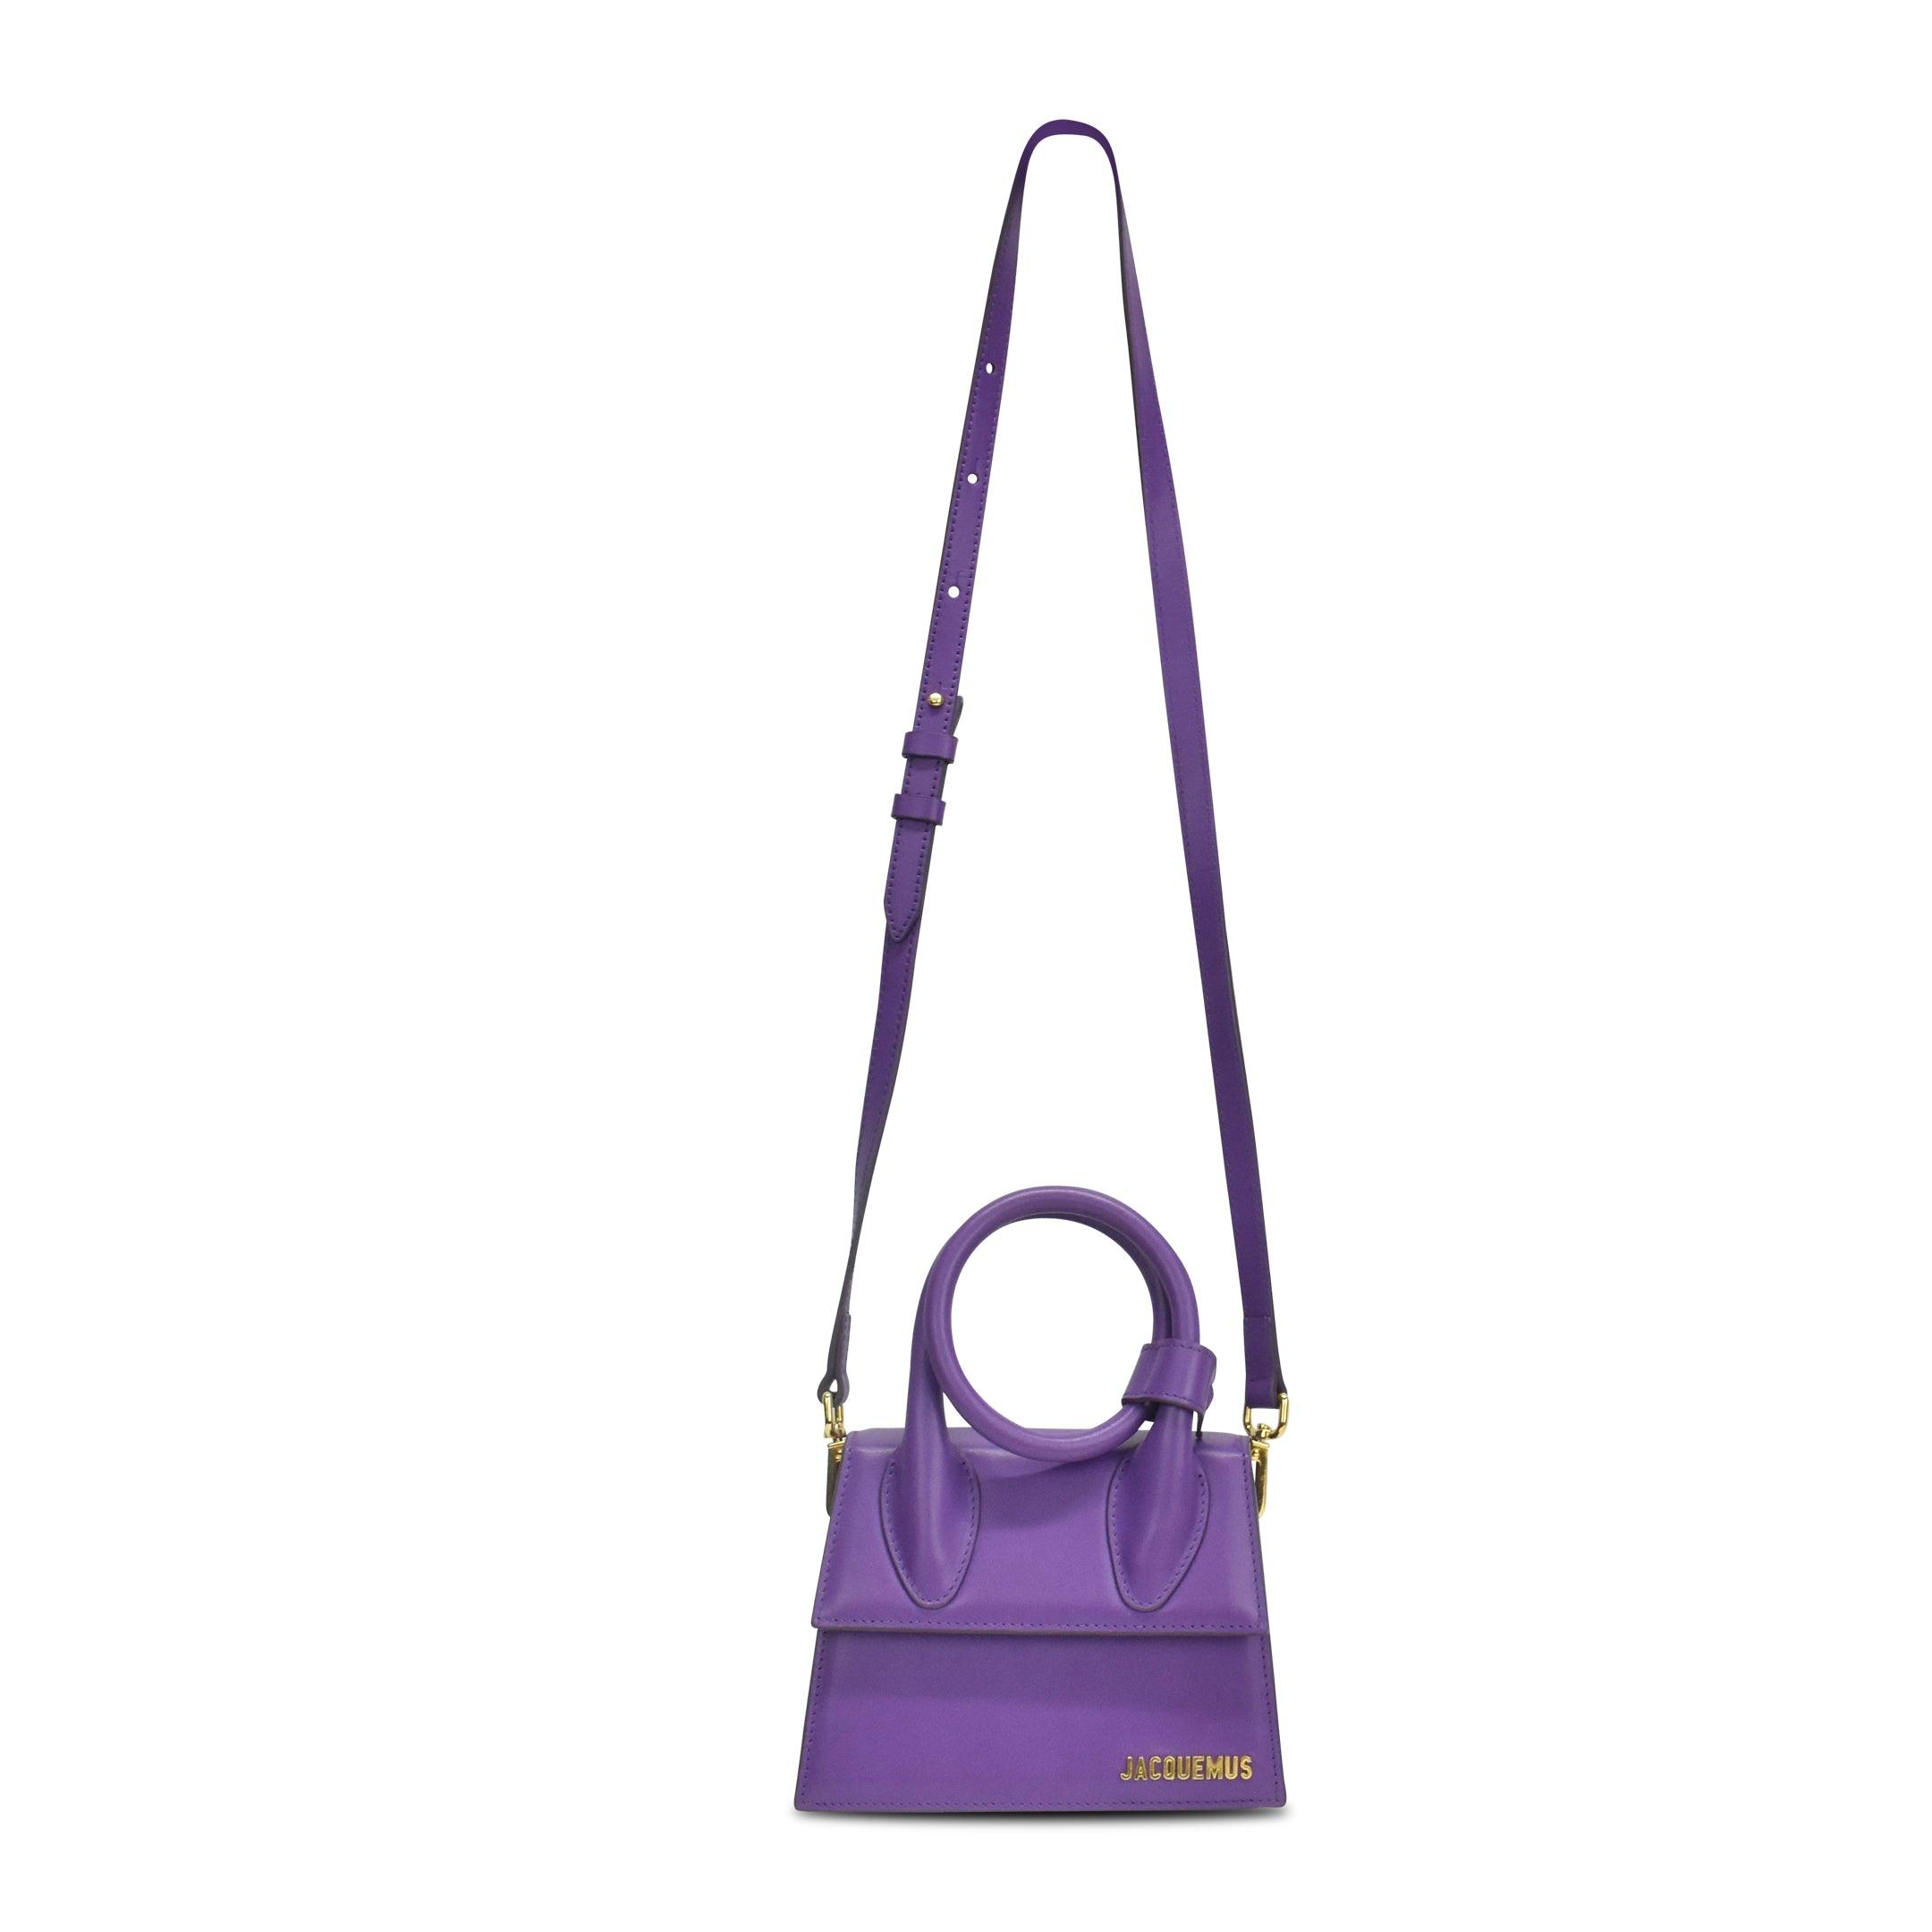 Jacquemus 'Le Chiquito Noeud' Handbag - Fashionably Yours